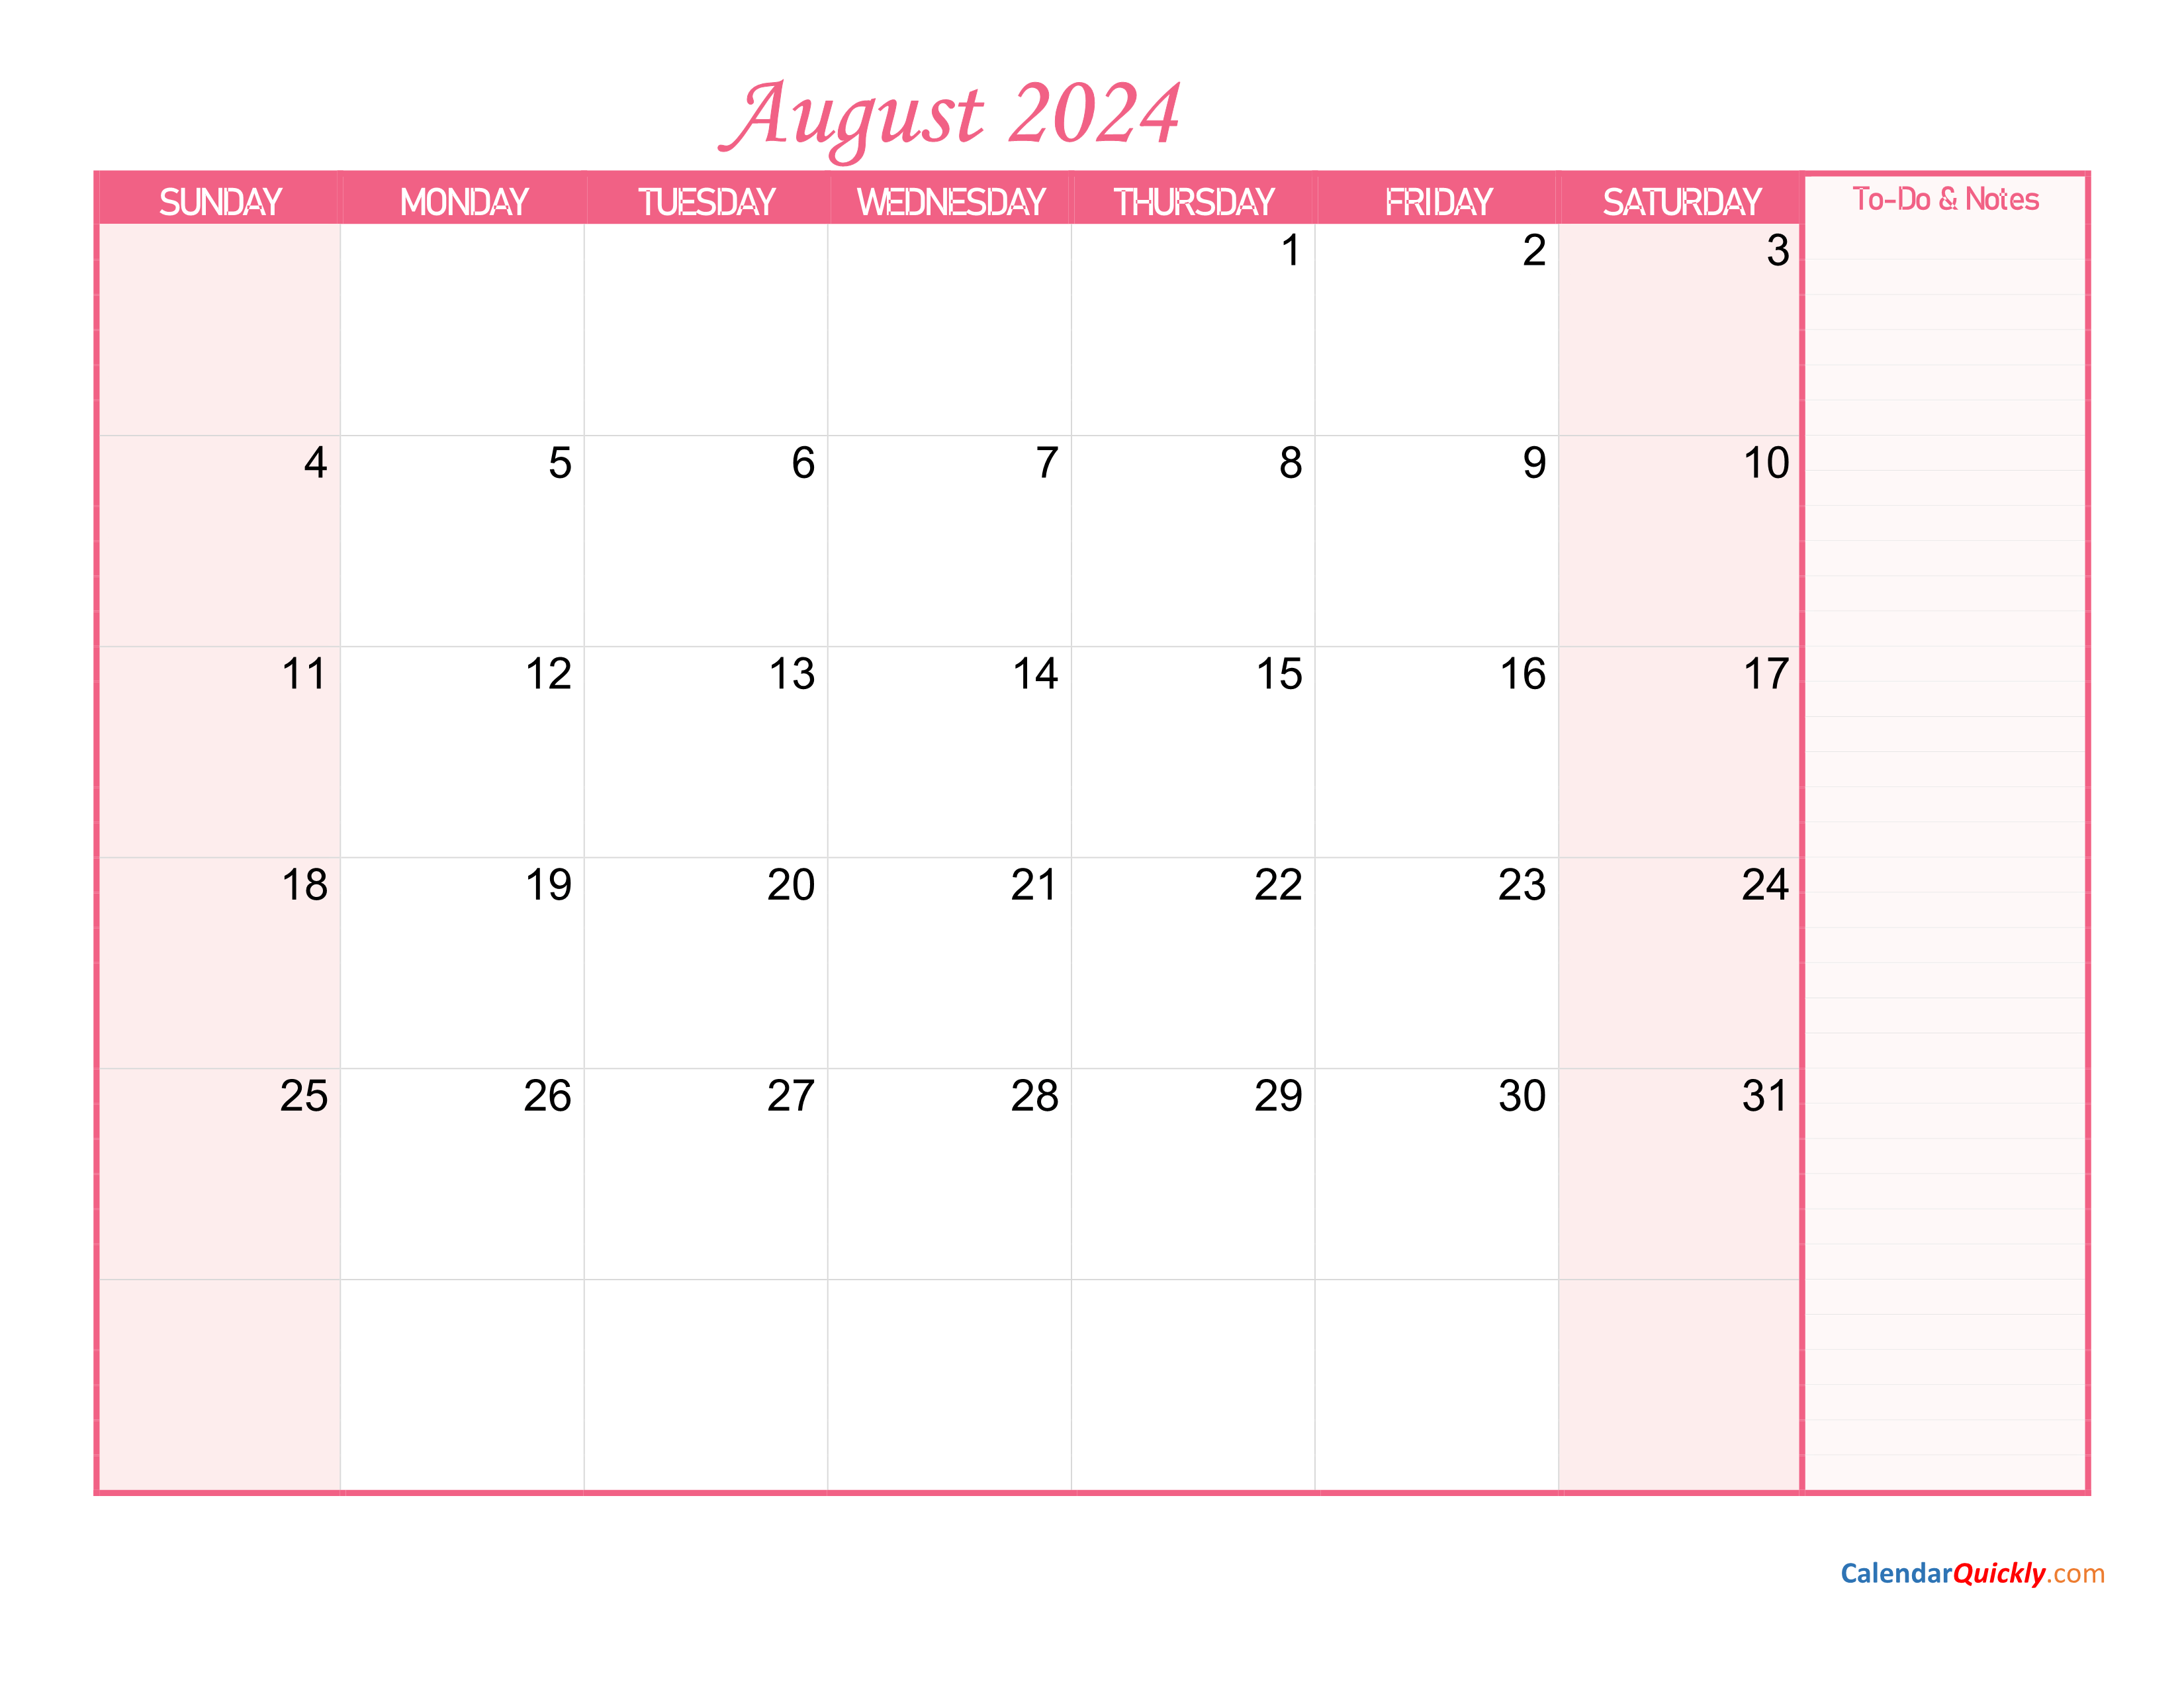 August Month Calendar 2024 Easy to Use Calendar App 2024